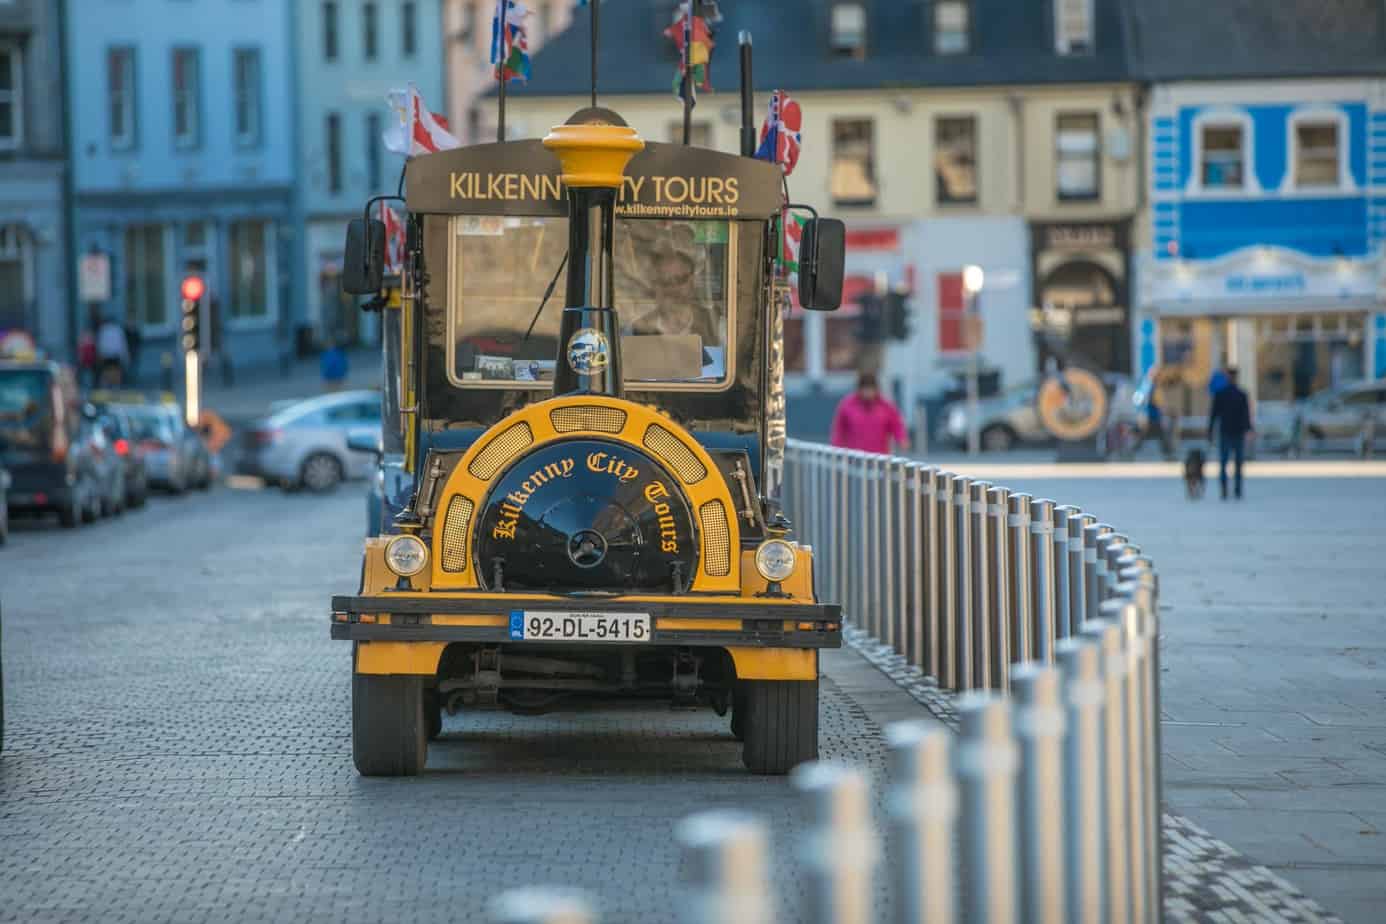 Kilkenny City Tours